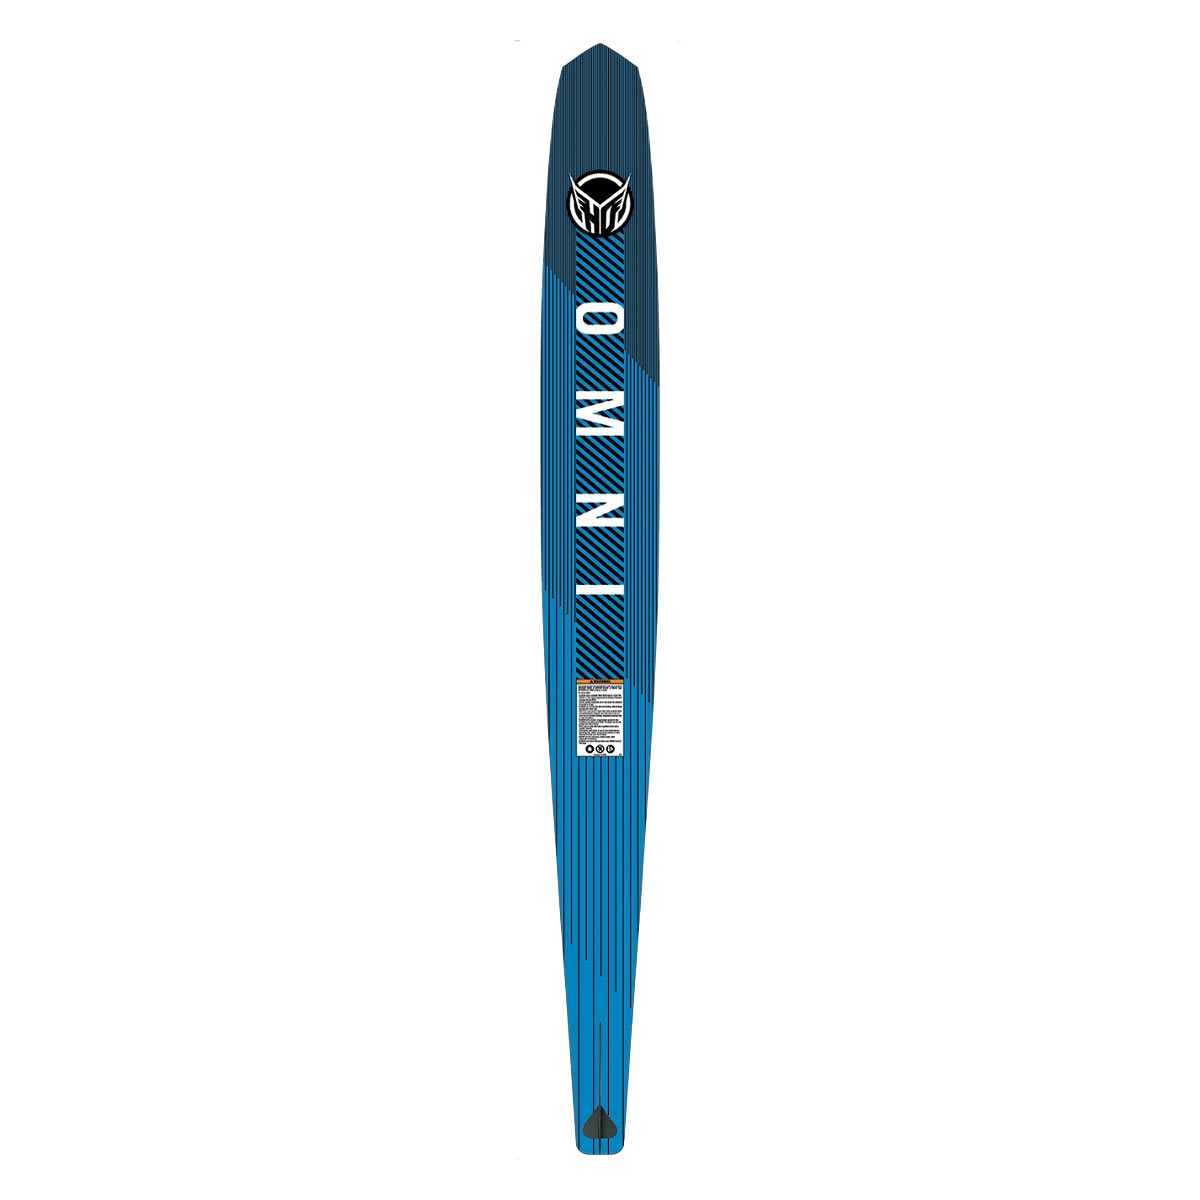 HO Omni Slalom Ski w/ Stance 110 and Stance Adjustable Rear Toe Plate